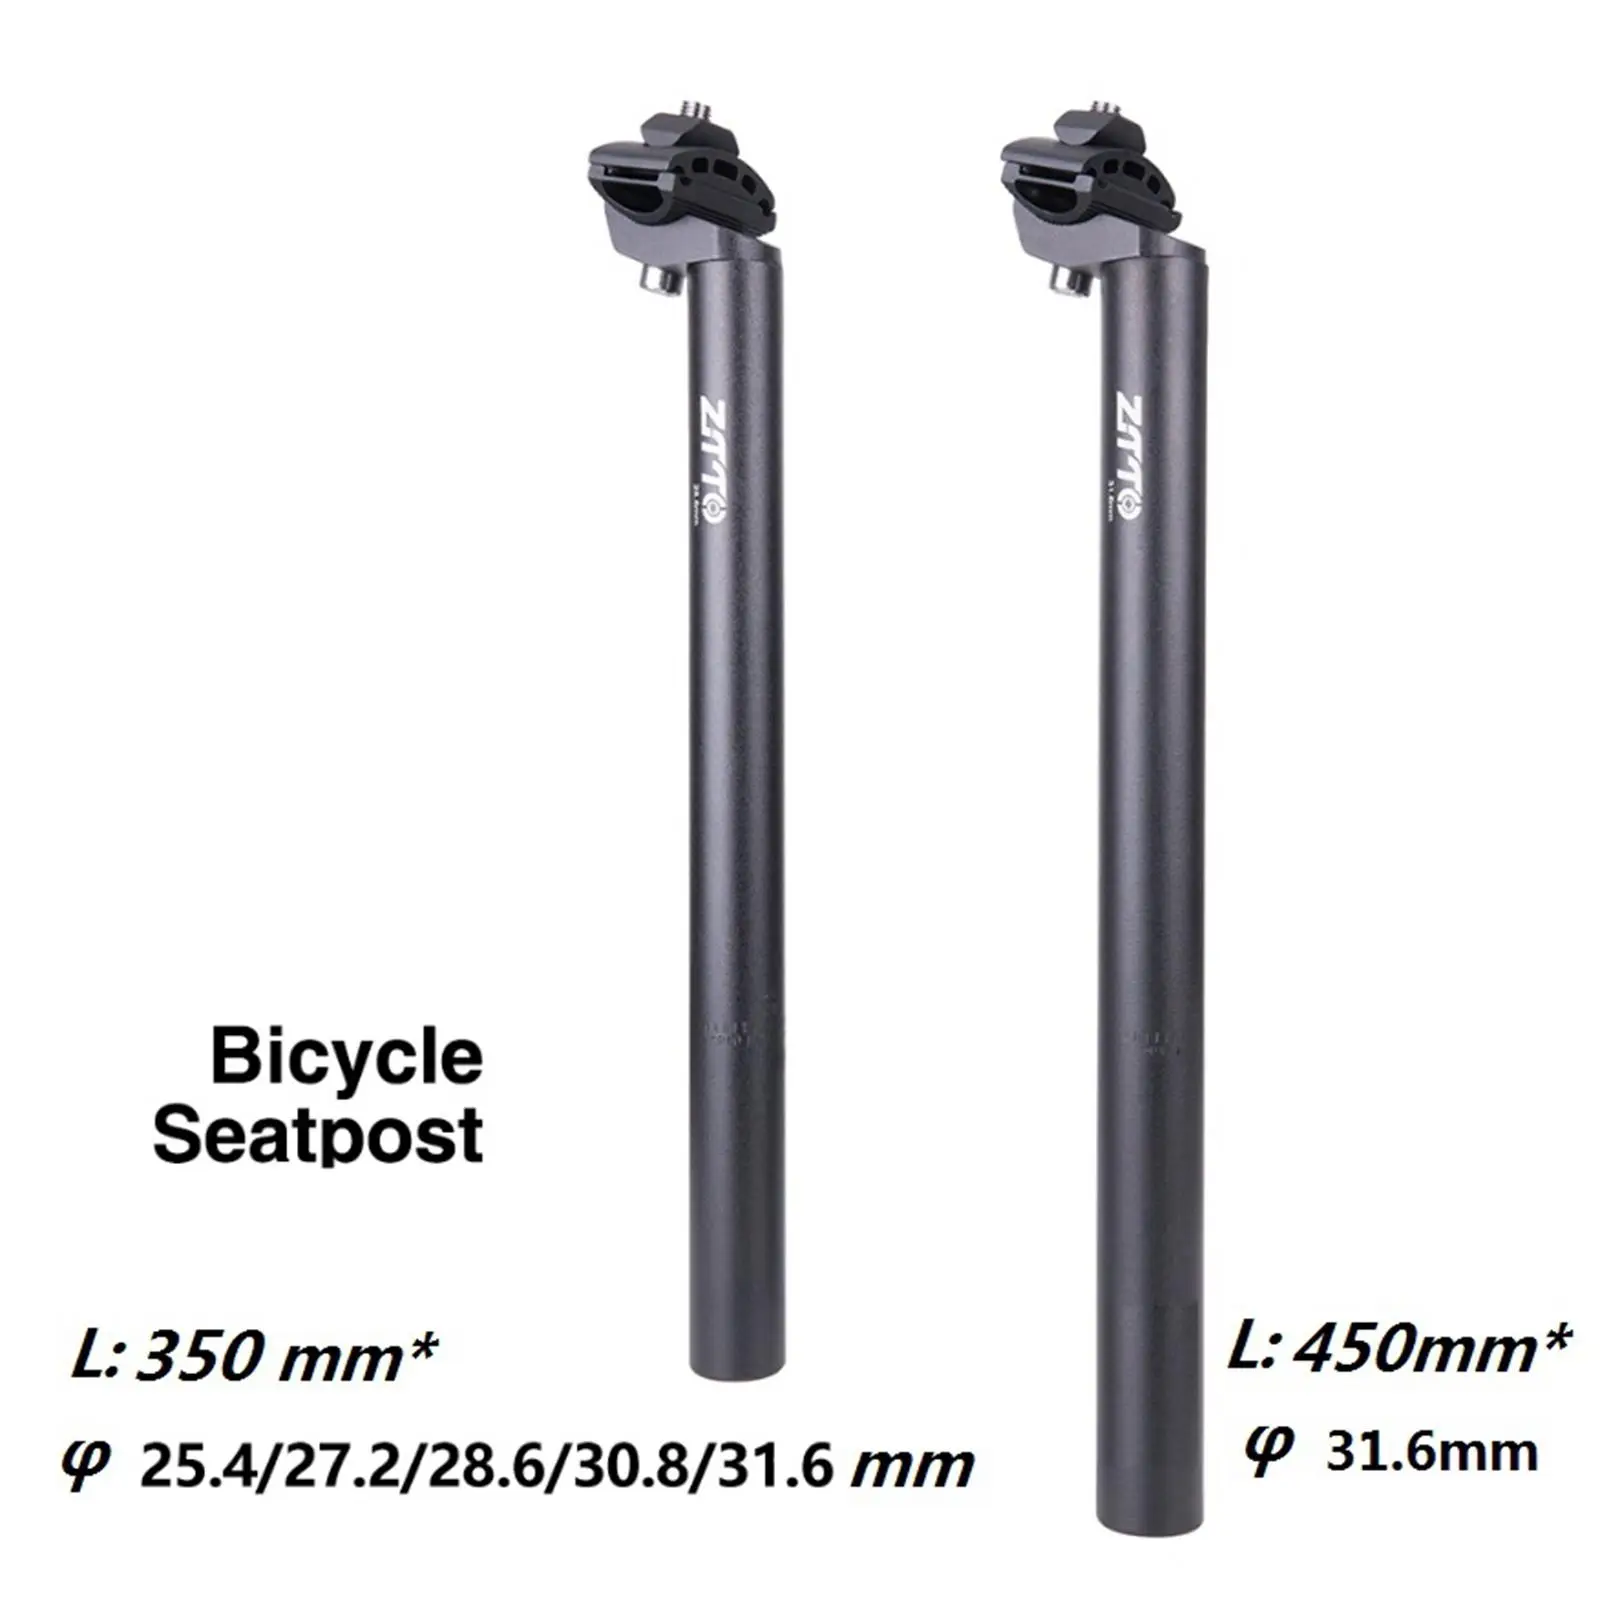 25.4/27.2/28.6/30.8/31.6mm MTB Road Bike Seatpost Seat Post Tube 350mm 450mm